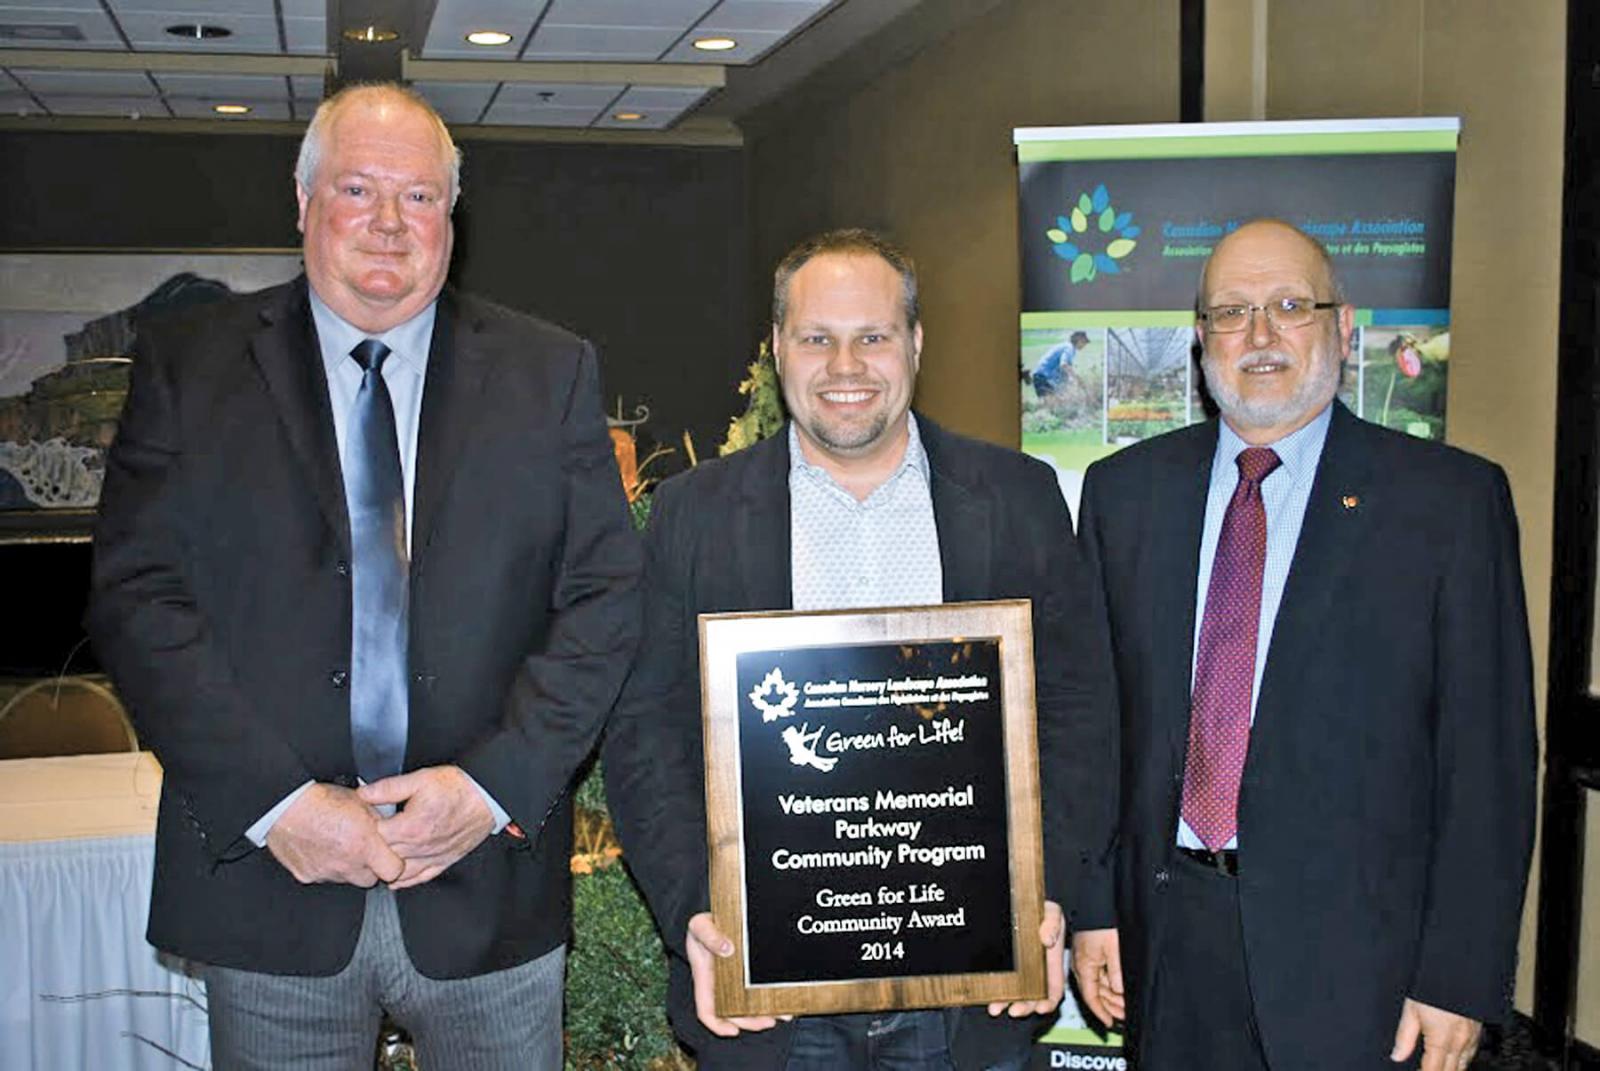 Landscape Ontario members dominate national awards